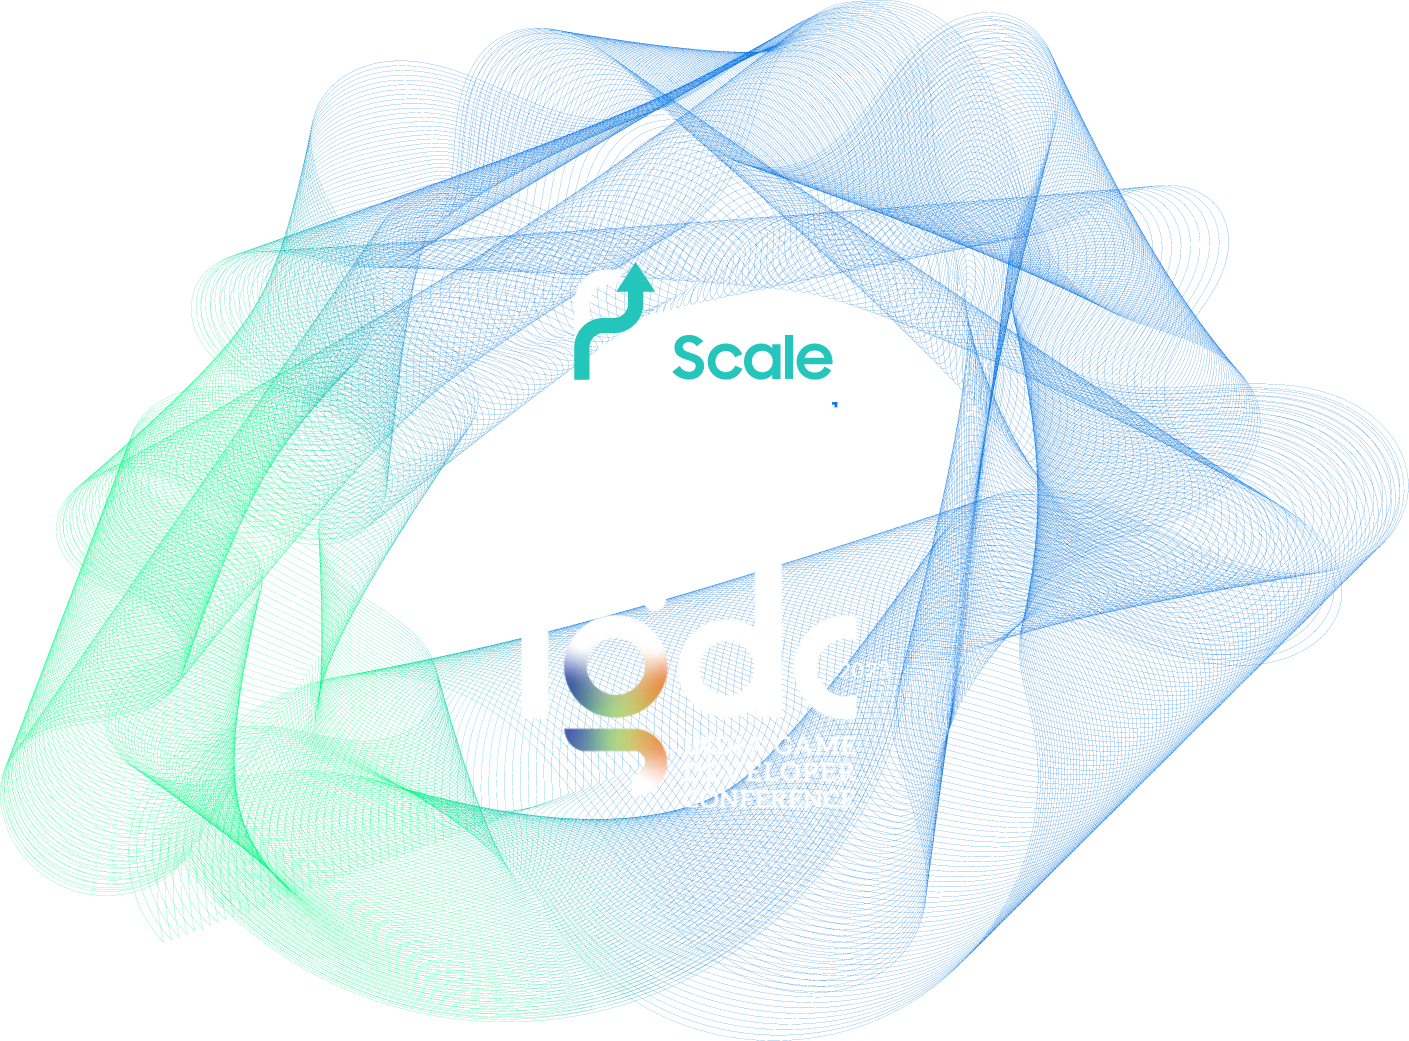 India Game Developer Conference (IGDC)